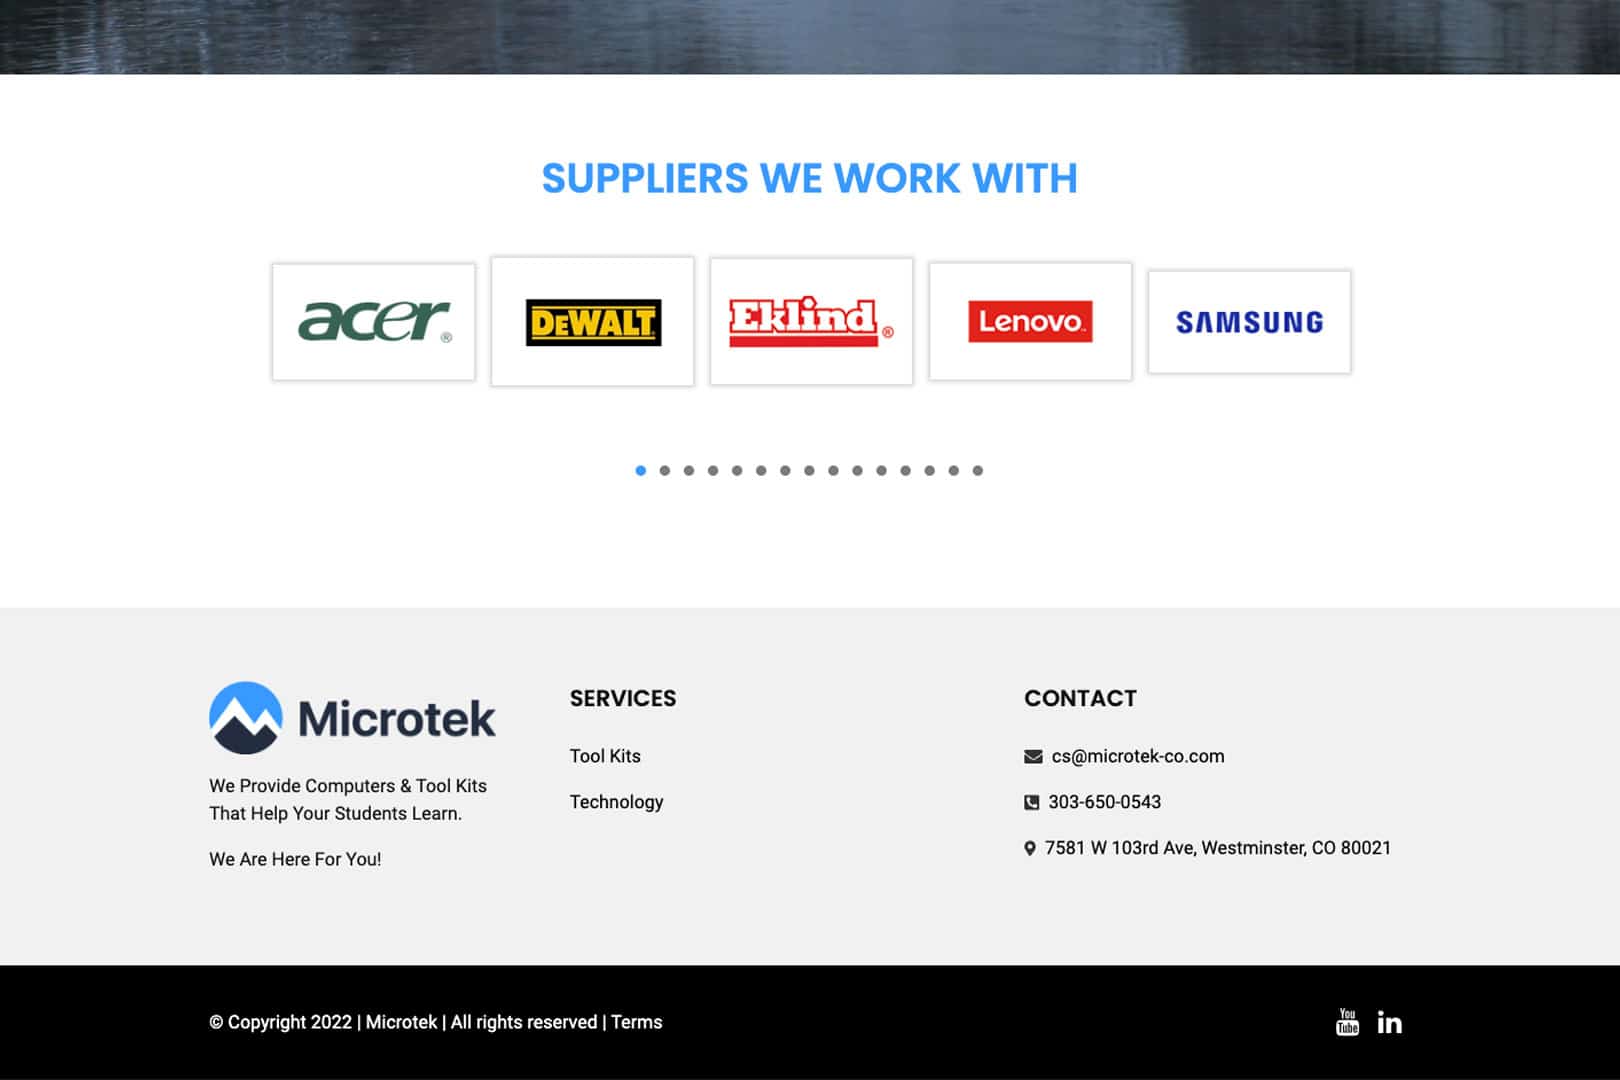 Microtek supplier partners